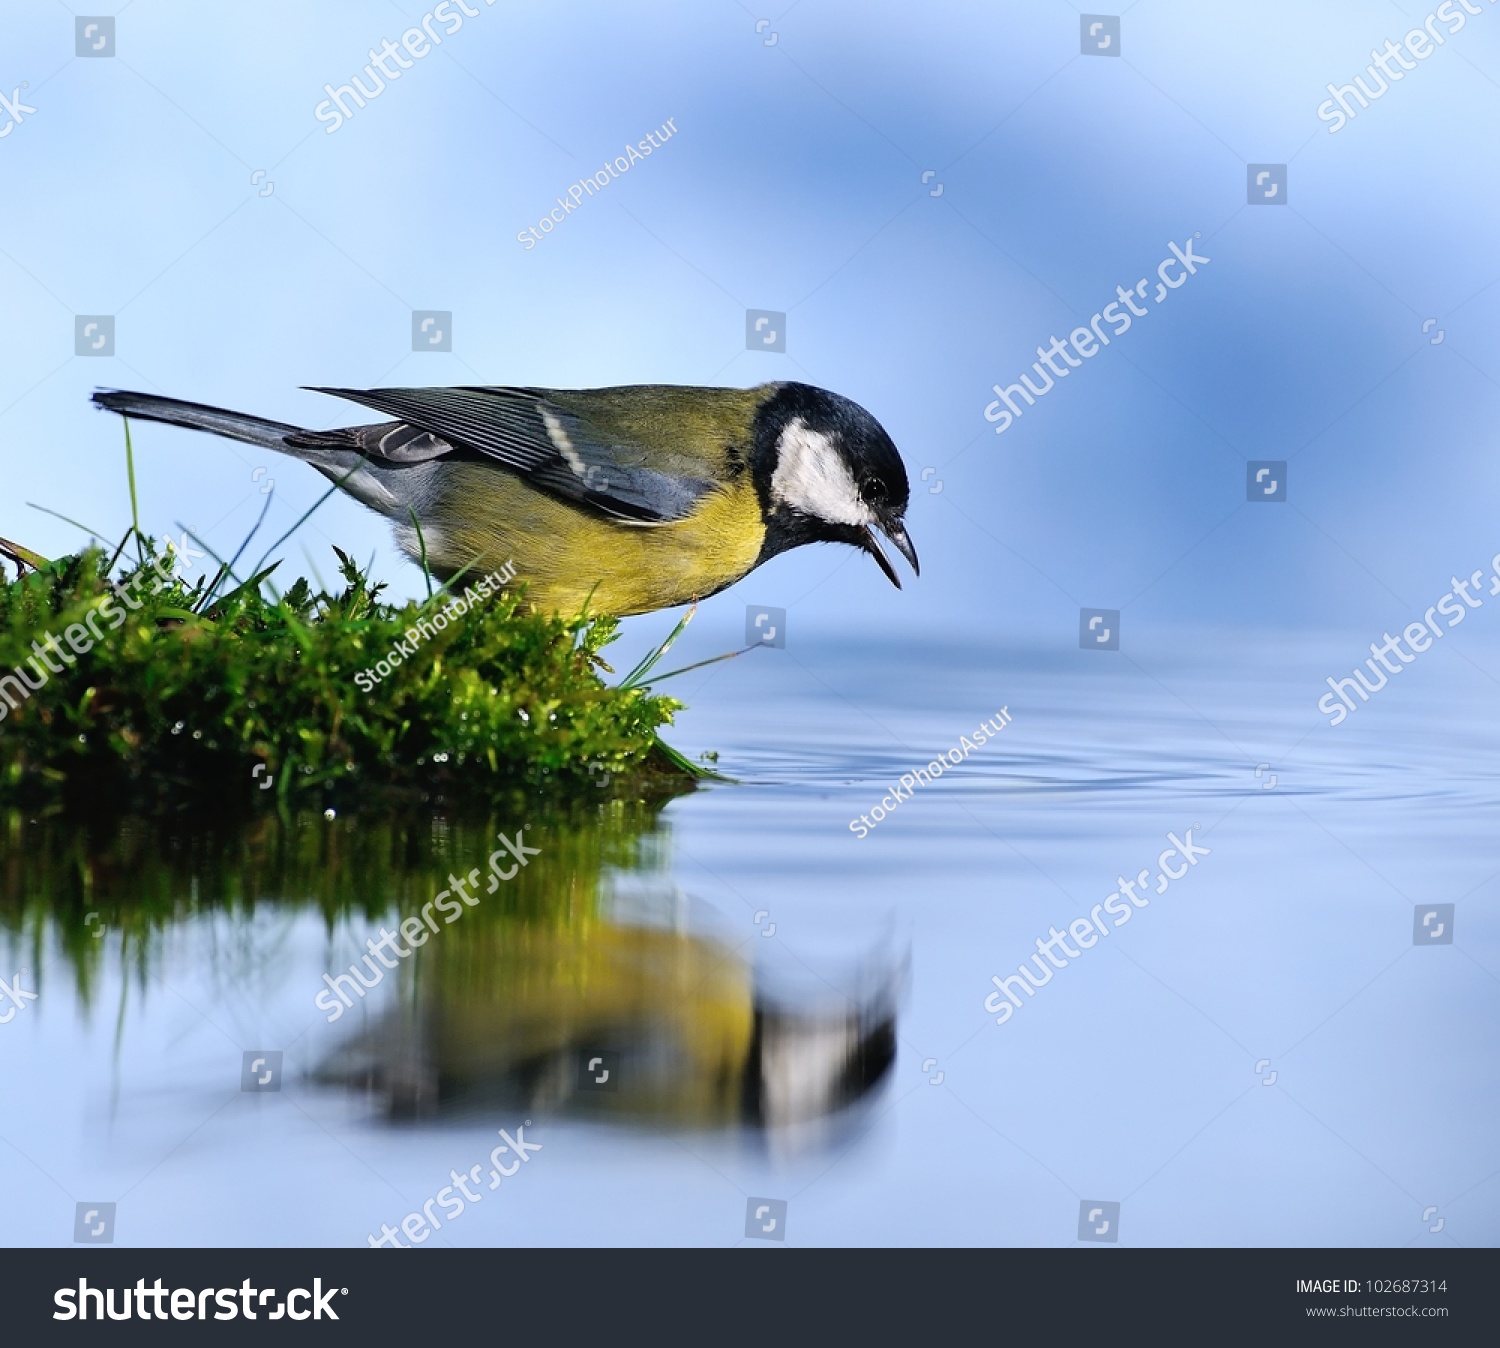 Thirsty bird photo